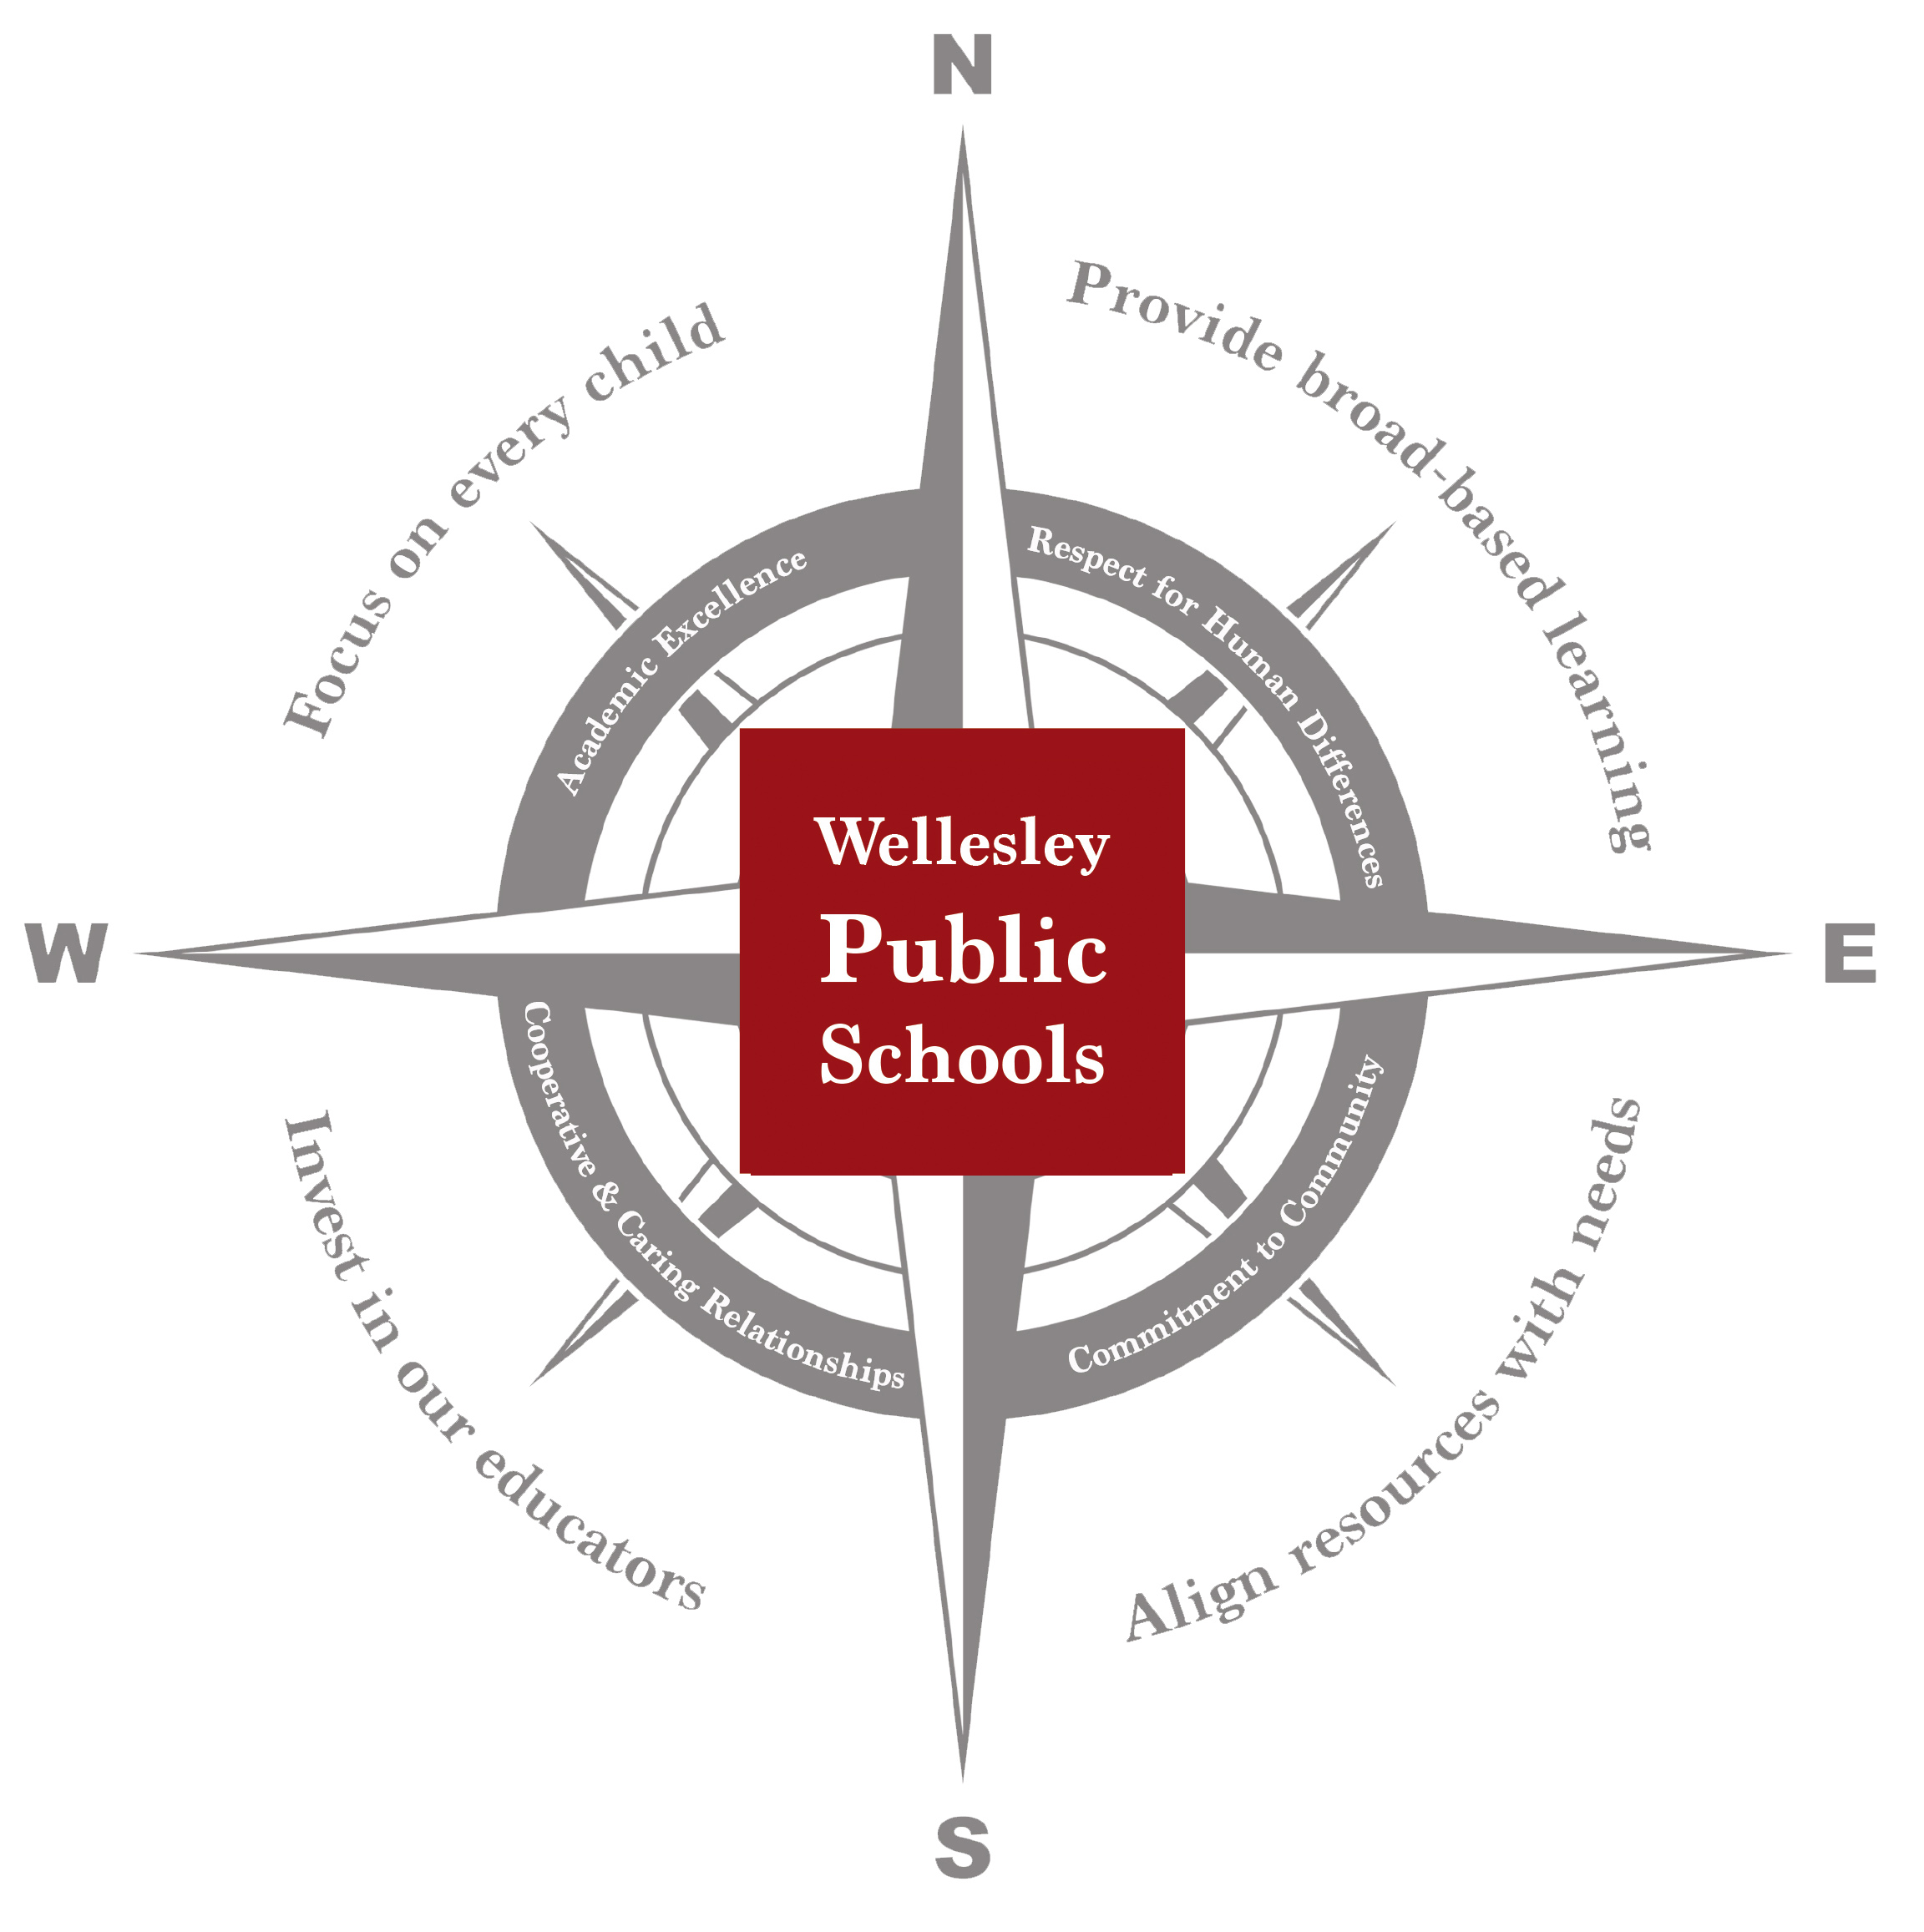 Wellesley Public Schools Strategic Plan